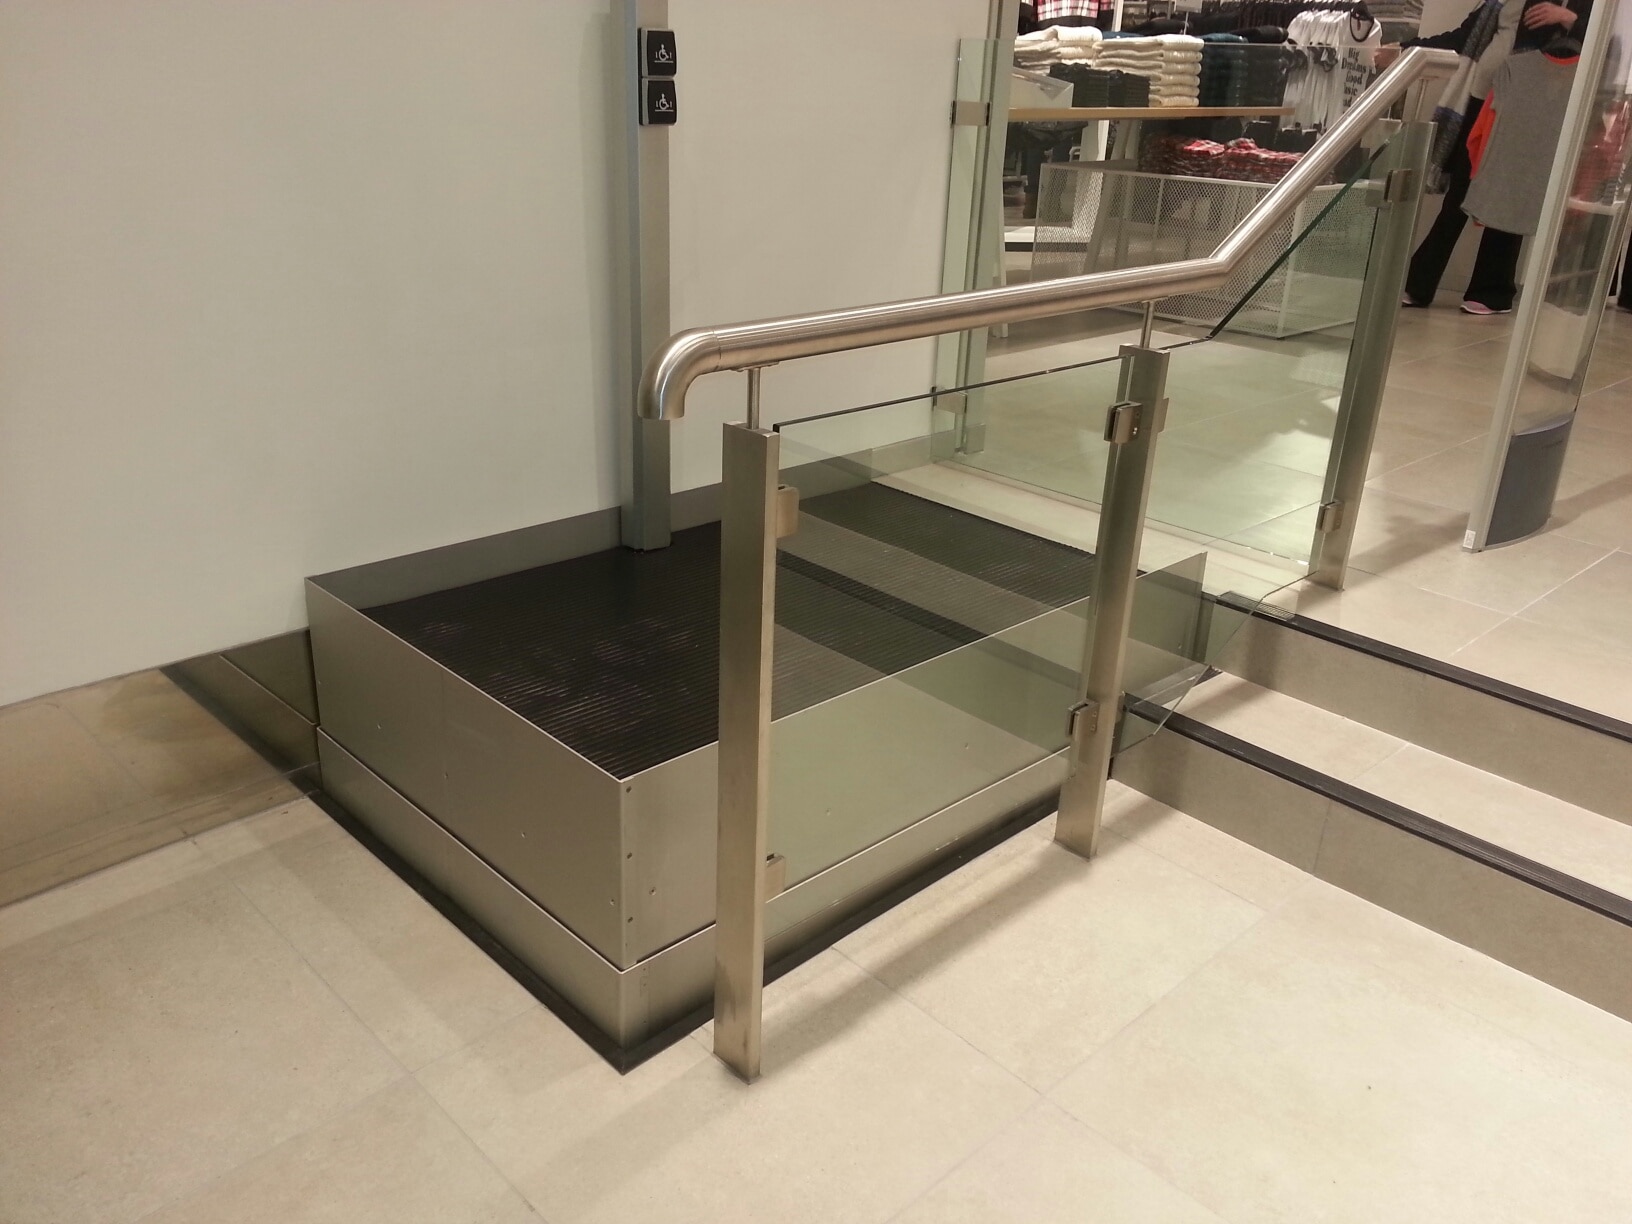 H&M Platform Lift Installed